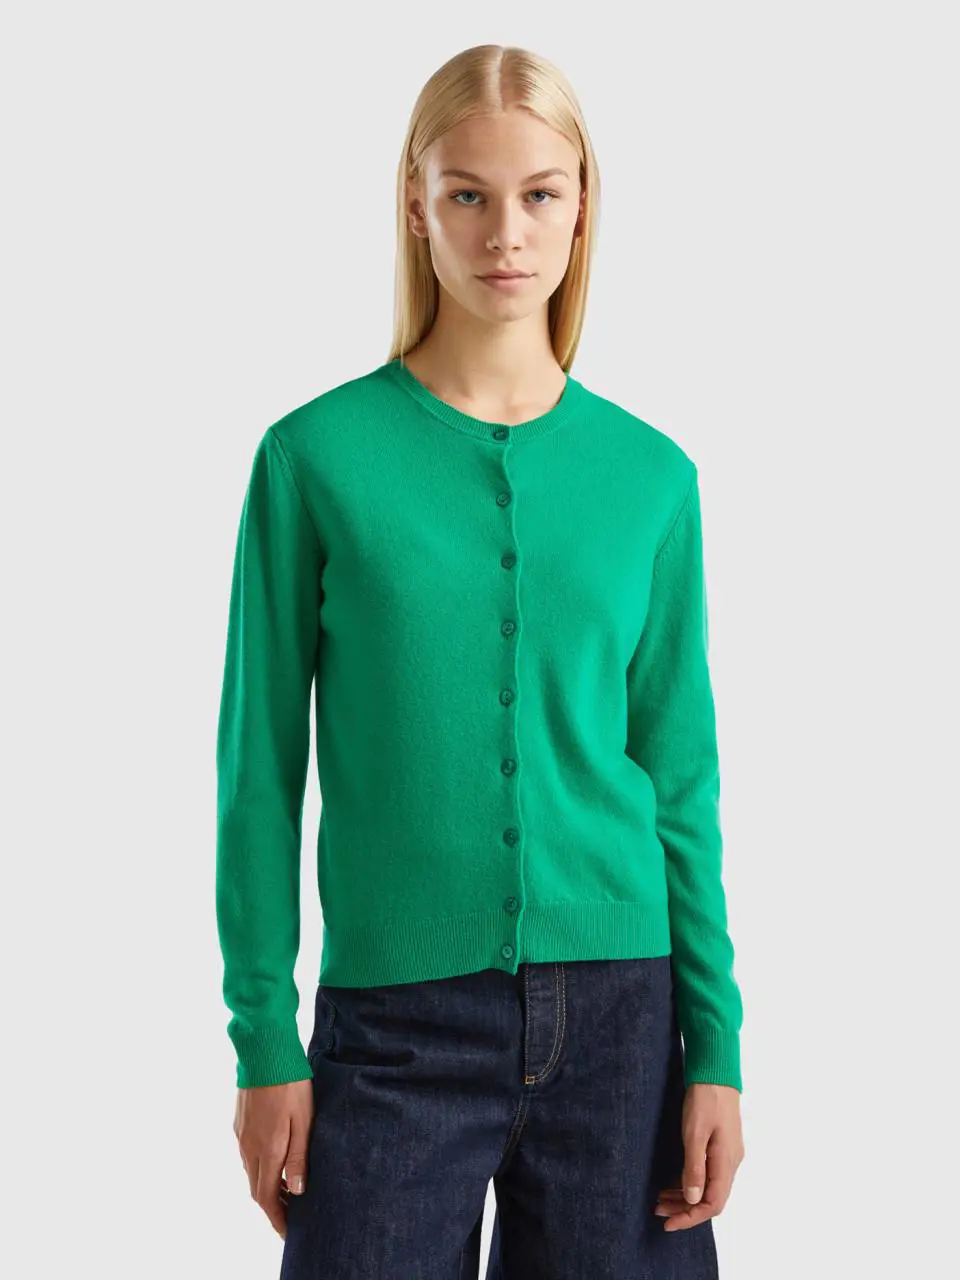 Benetton green crew neck cardigan in pure merino wool. 1